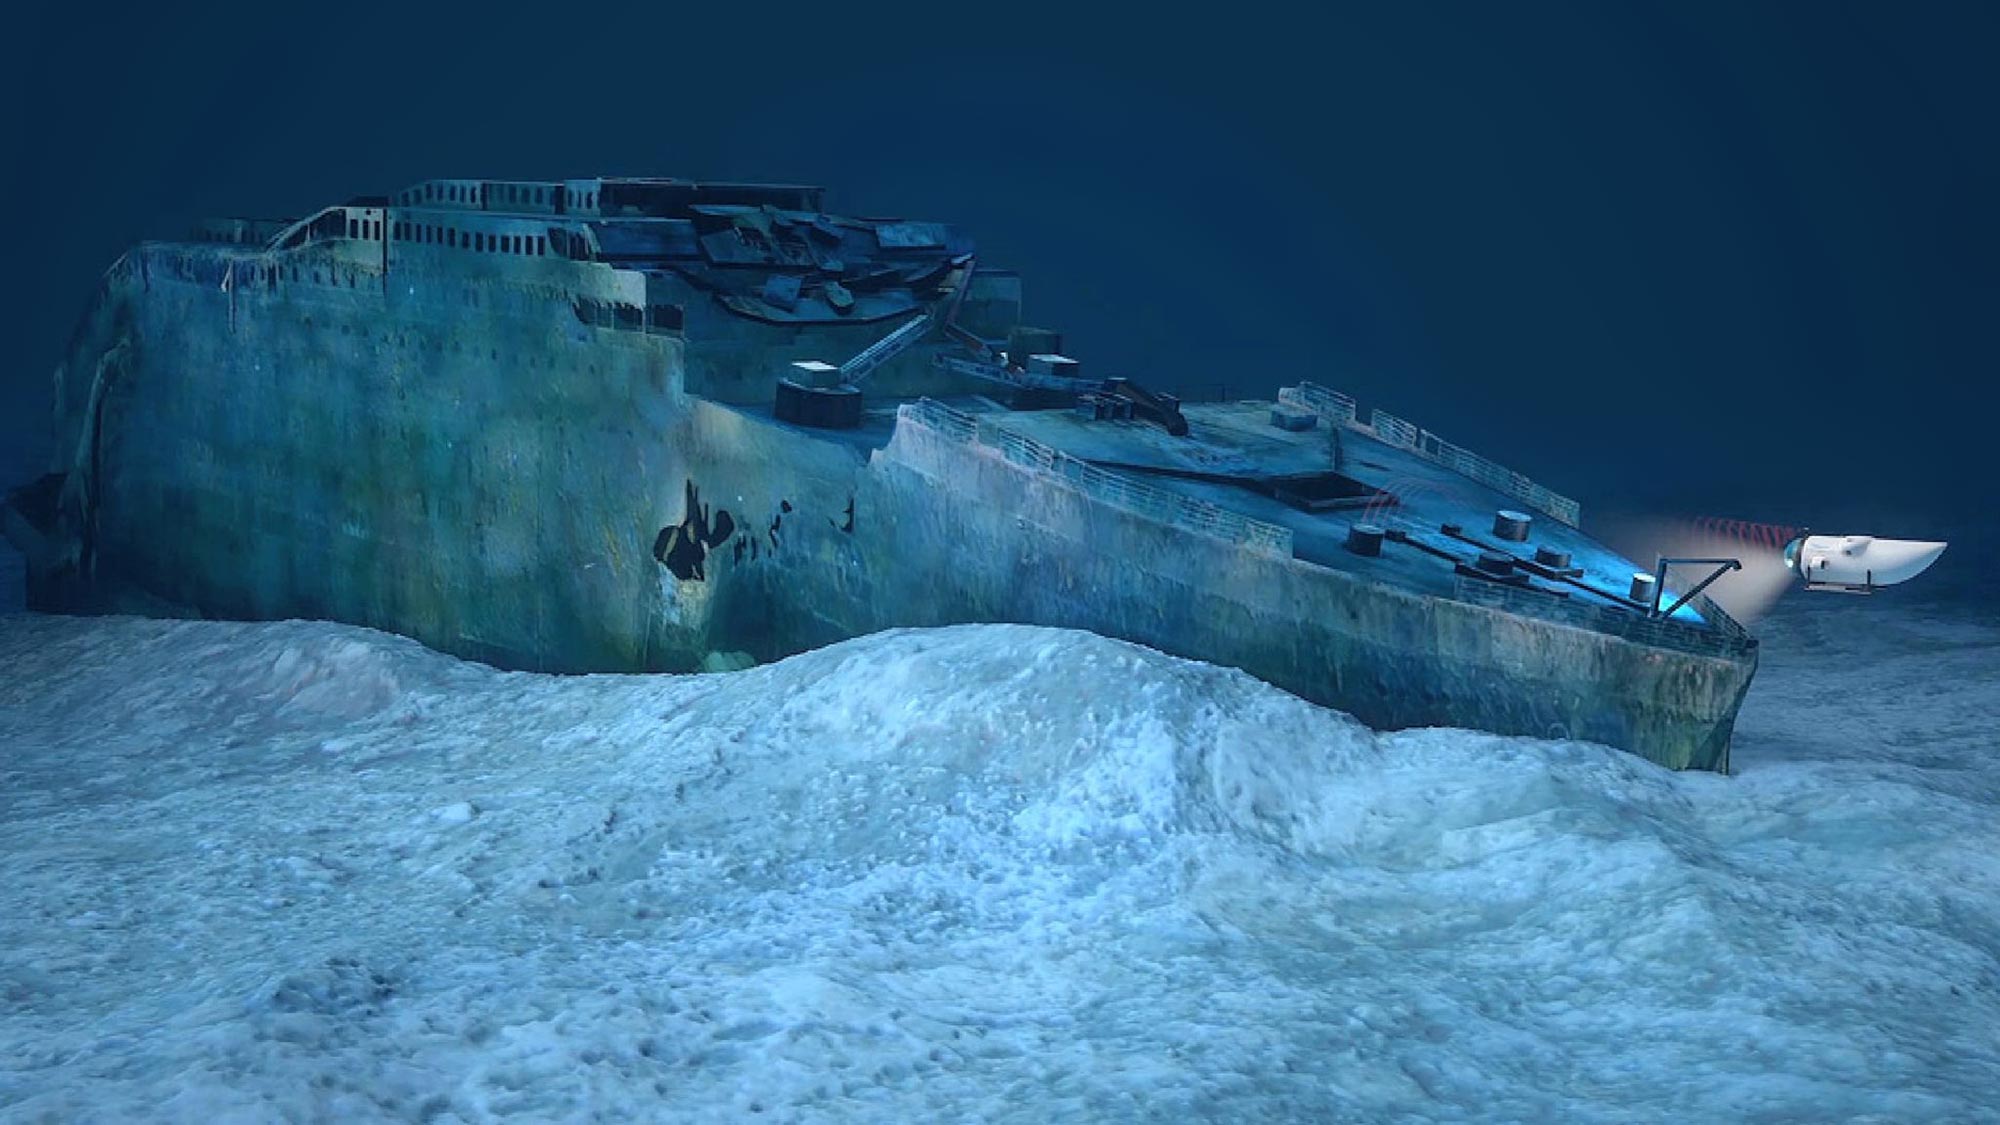 titanic pictures inside underwater